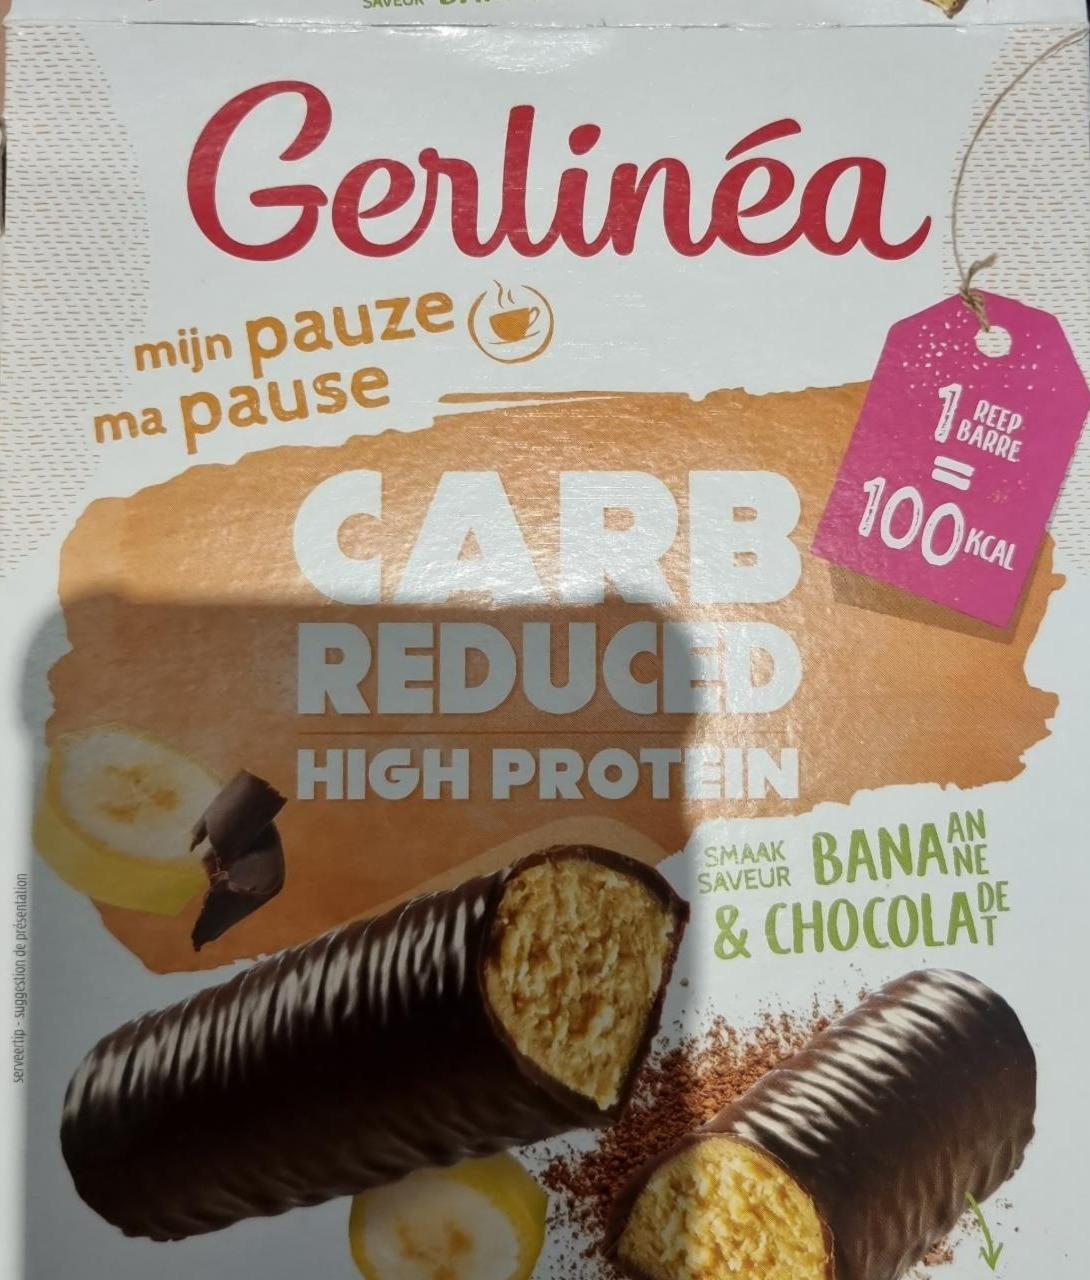 Fotografie - Carb reduced High protein smaak saveur Banane & Chocolat Gerlinéa